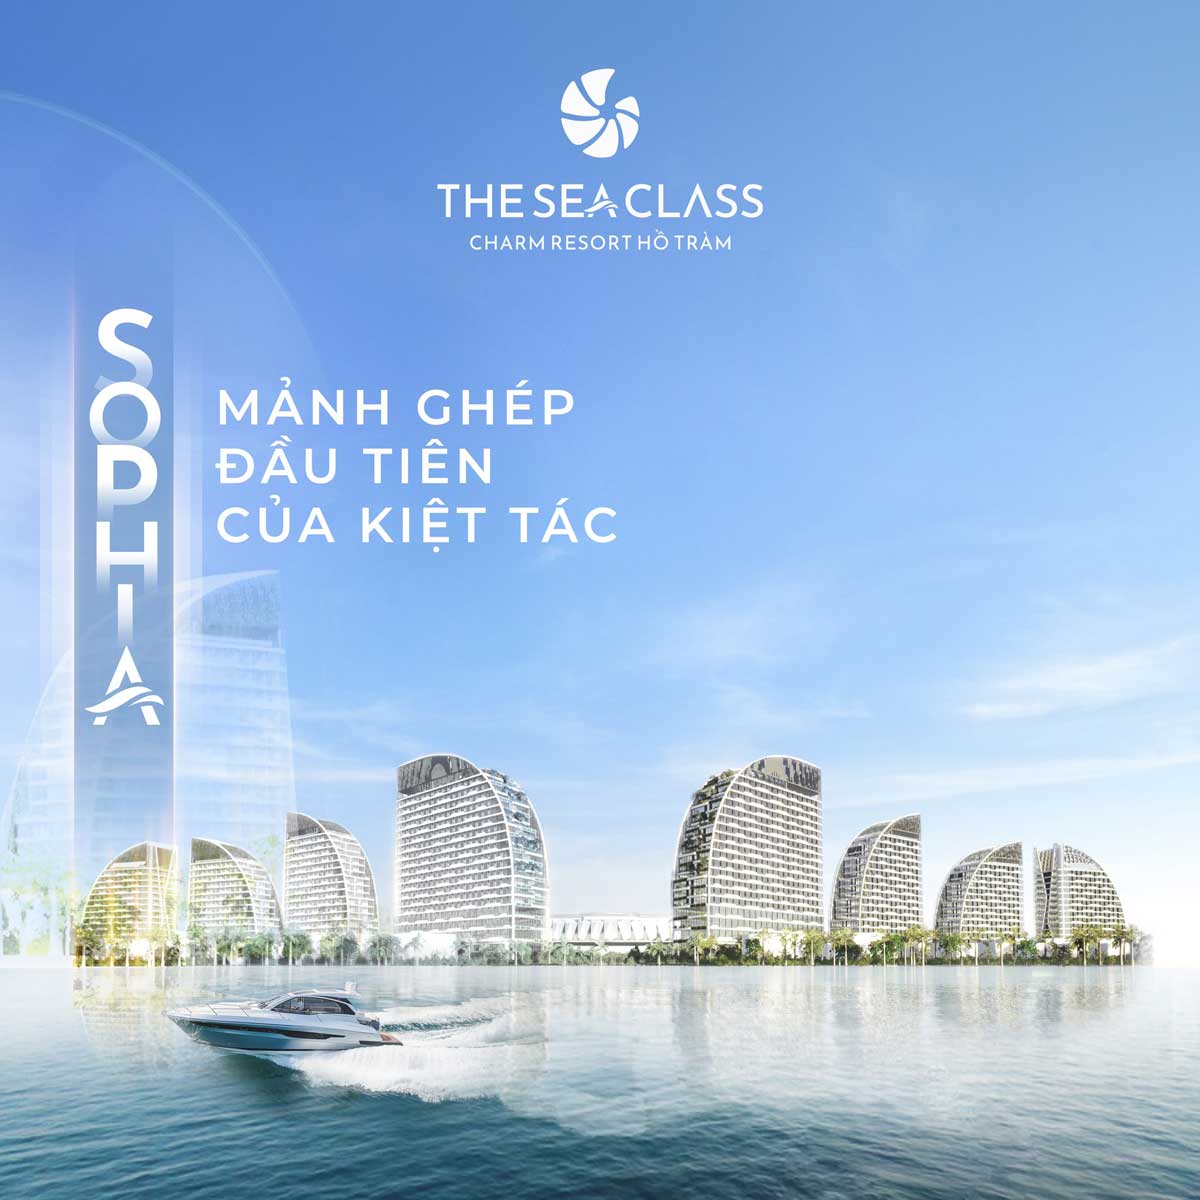 The Sea Class Charm Resort Ho Tram - The Sea Class